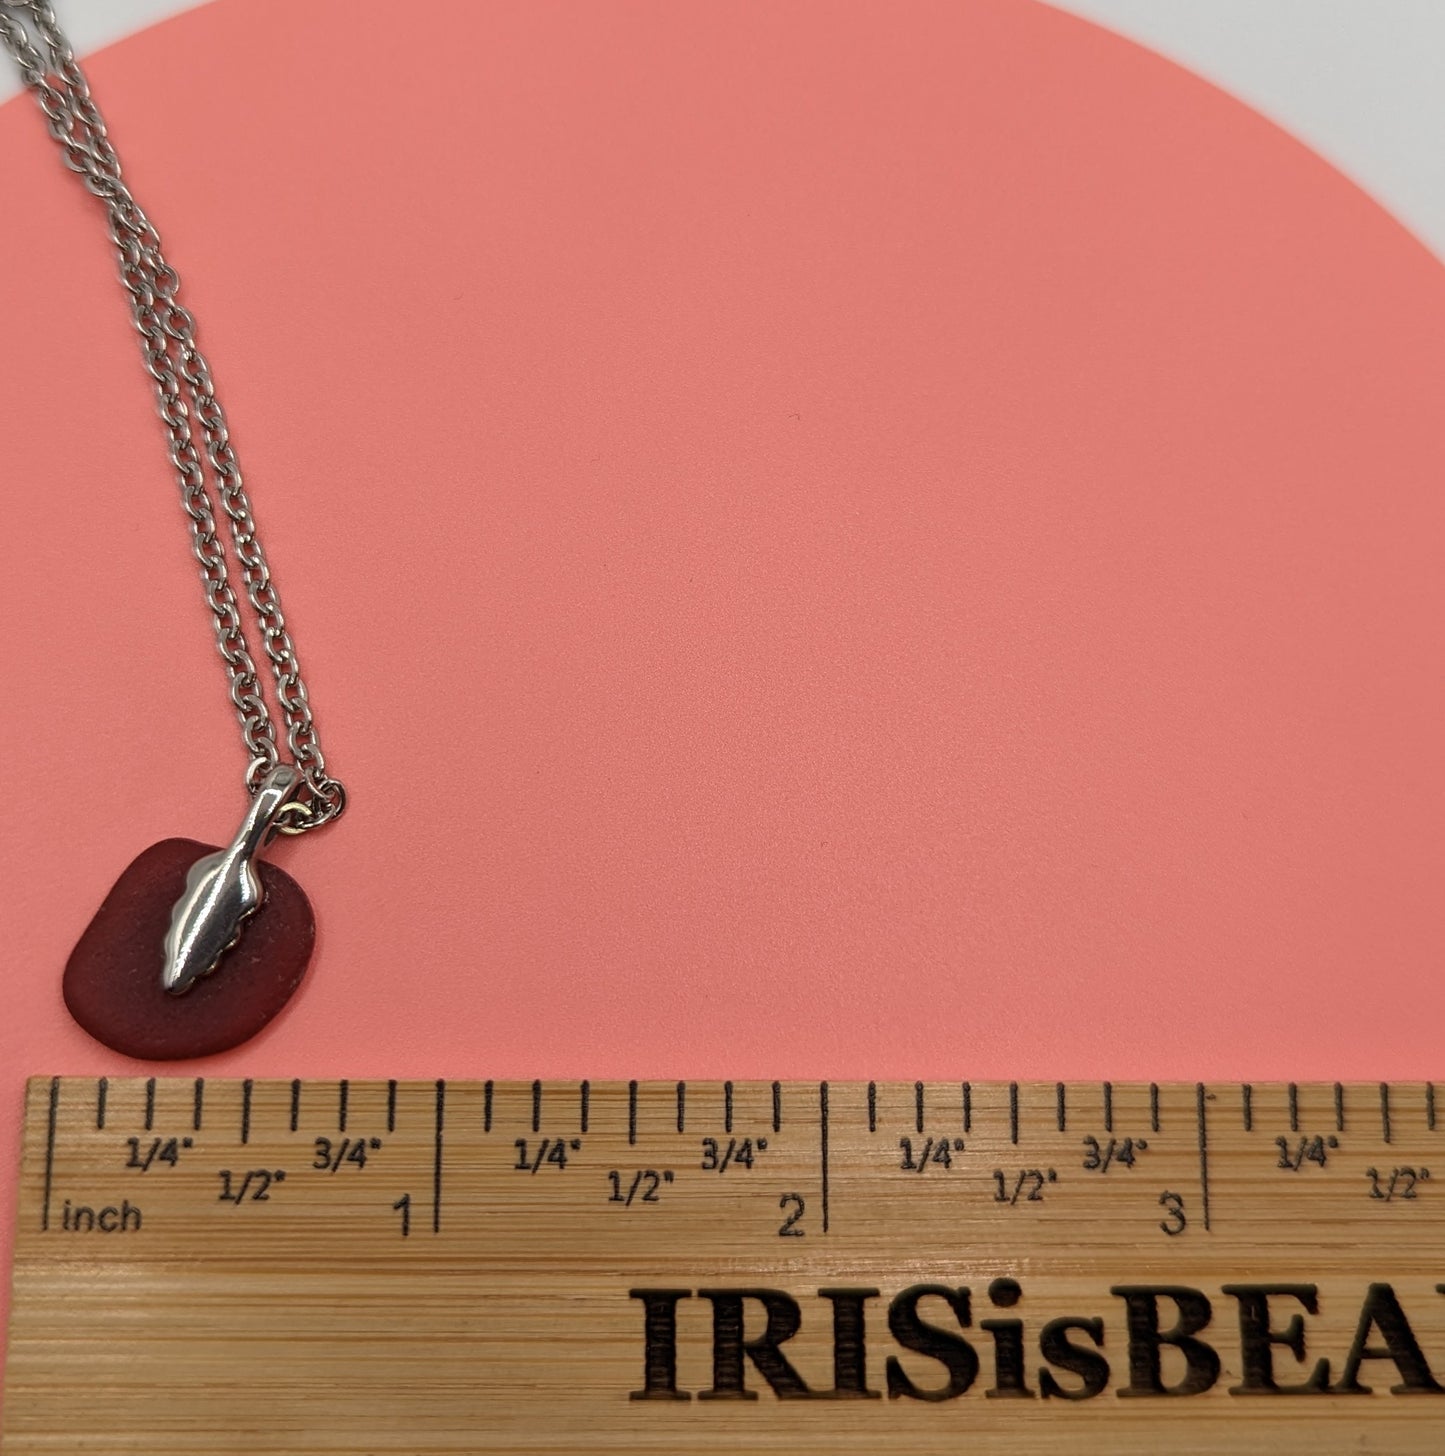 Small red seaglass pendant, genuine red seaglass necklace, beach seaglass